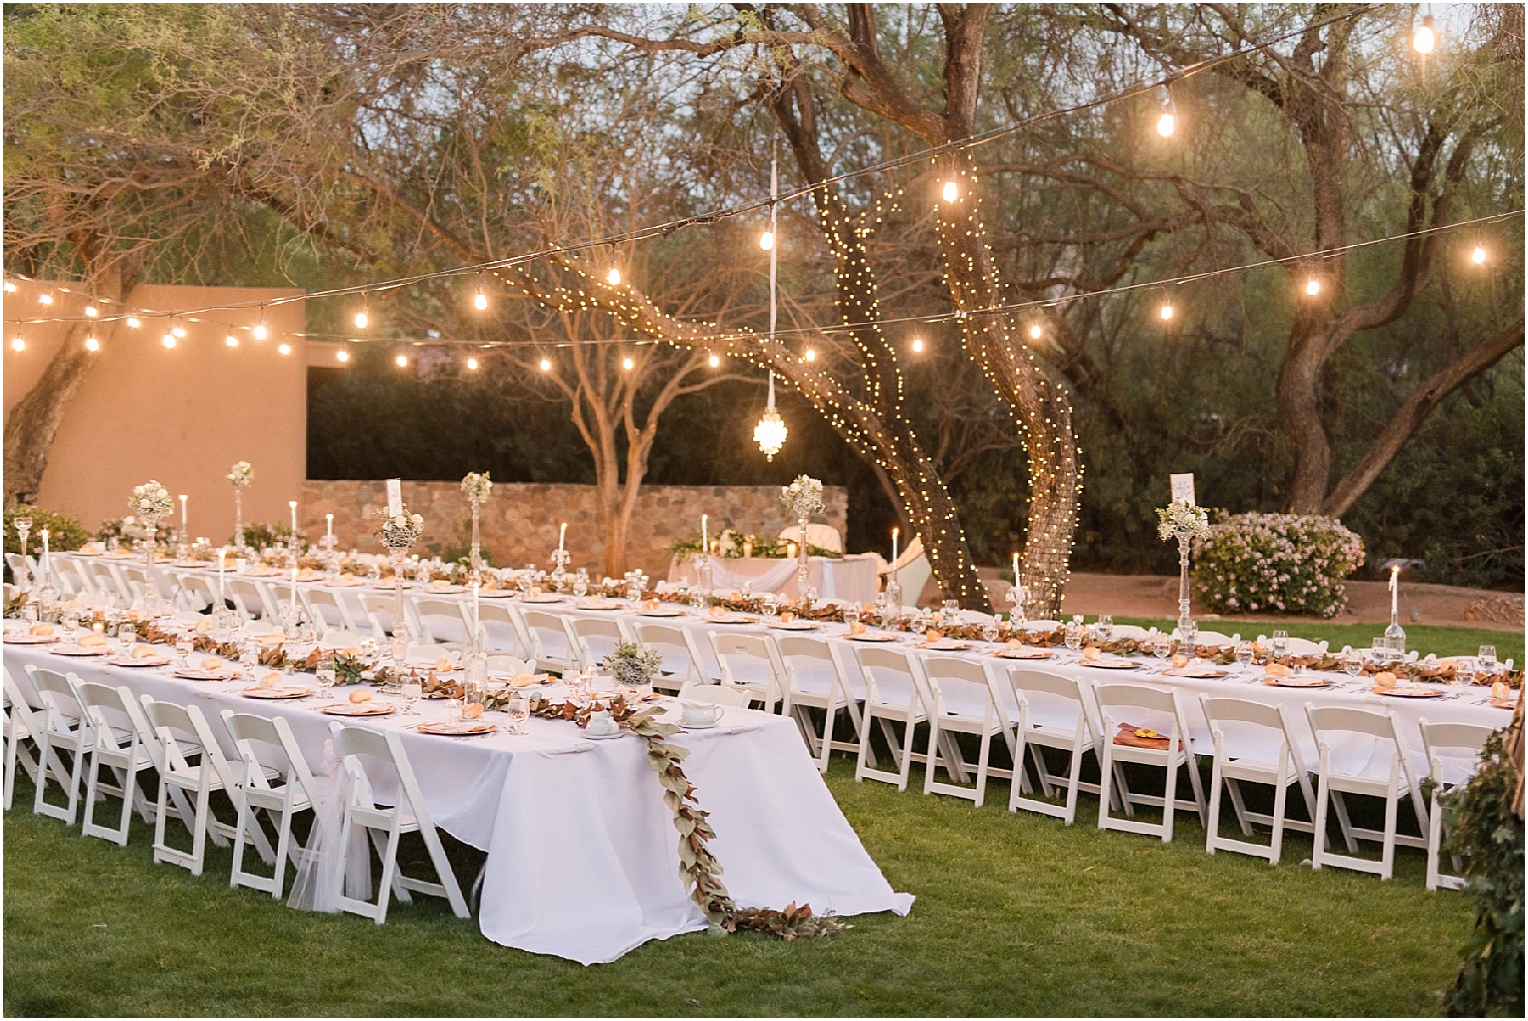 Intimate Backyard Wedding Tucson, AZ Chanel + Eddie outdoor reception details with strand lighting